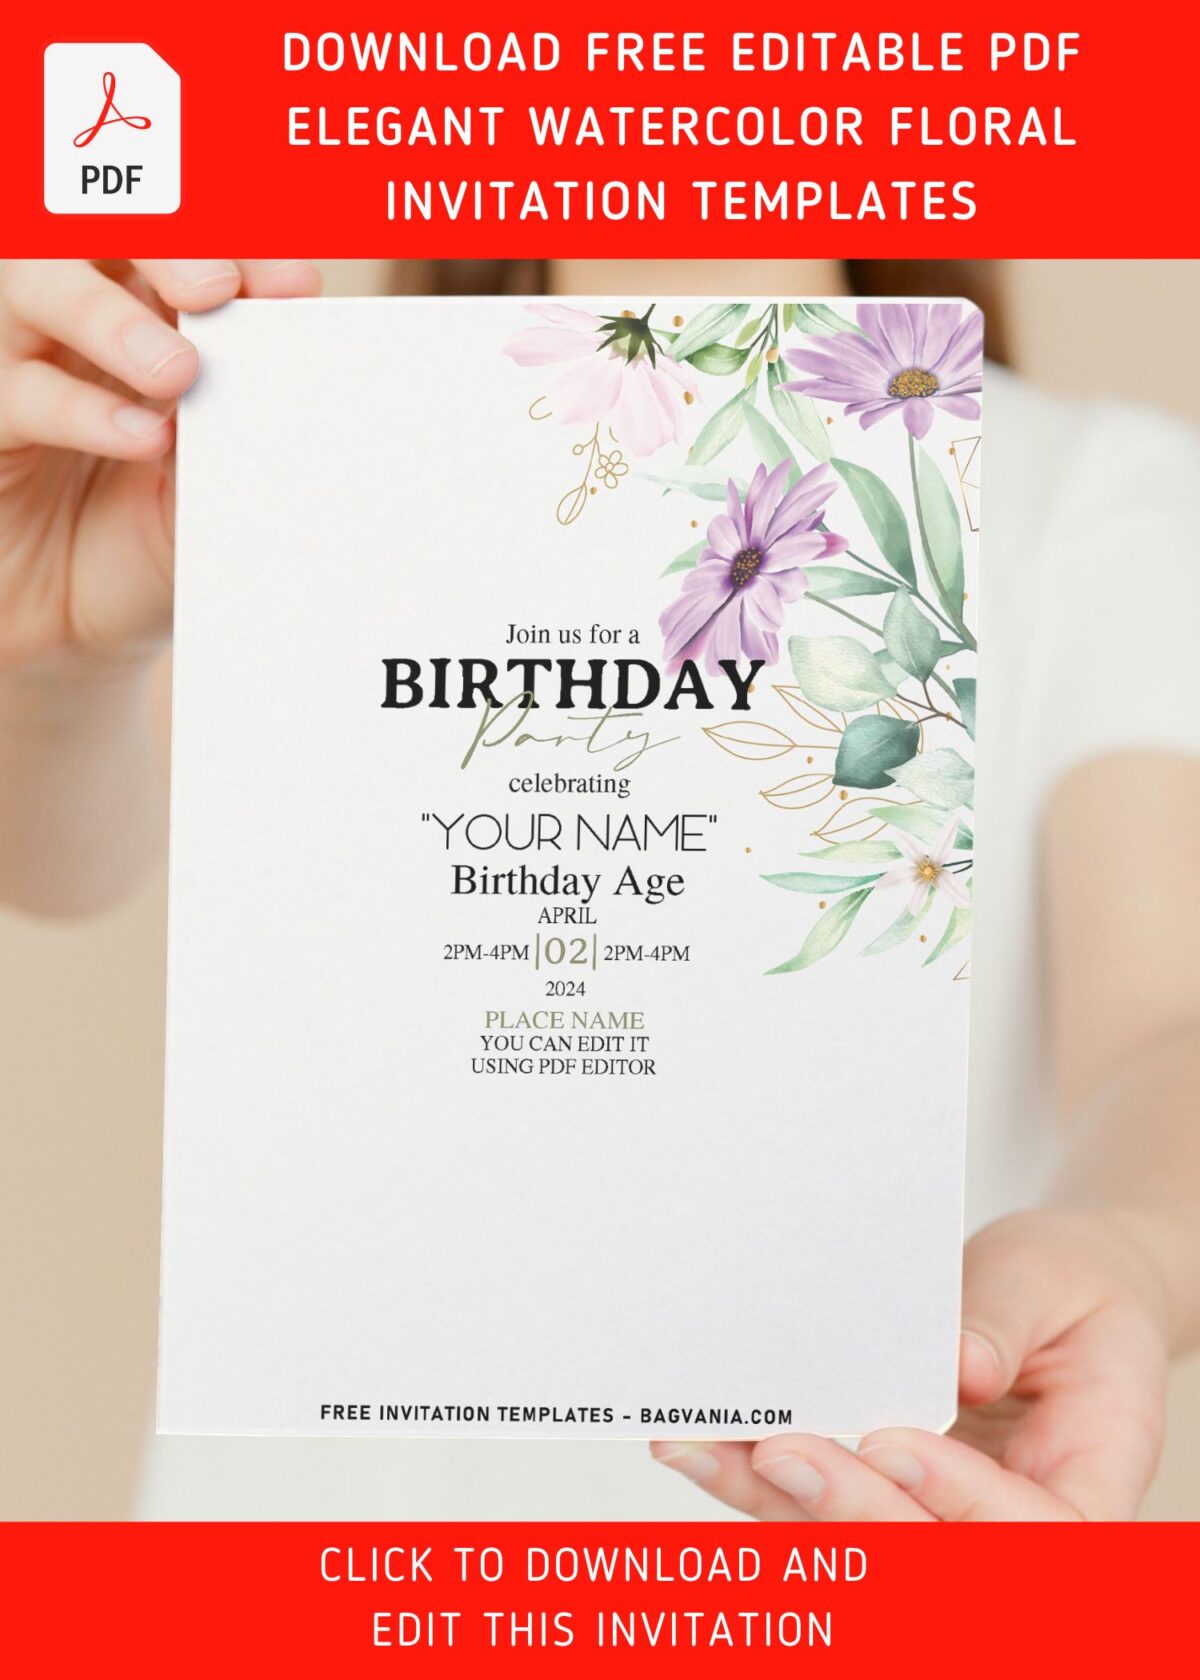 (Free Editable PDF) Spring Romance Birthday Invitation Templates with 